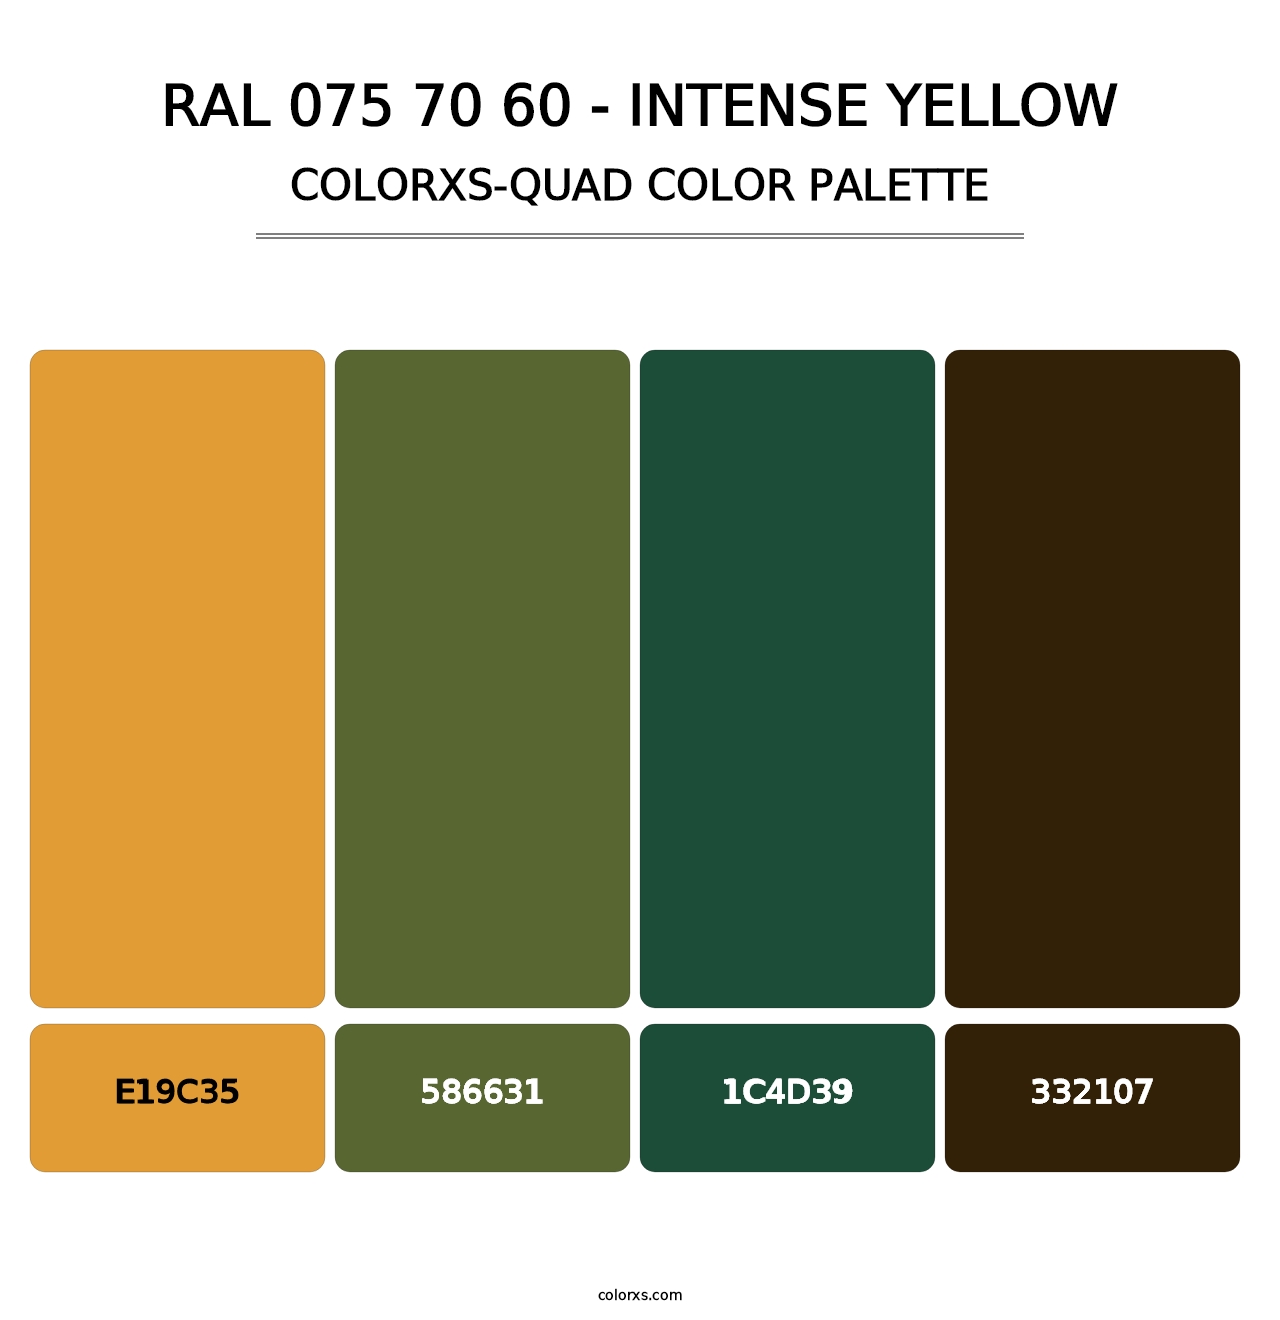 RAL 075 70 60 - Intense Yellow - Colorxs Quad Palette